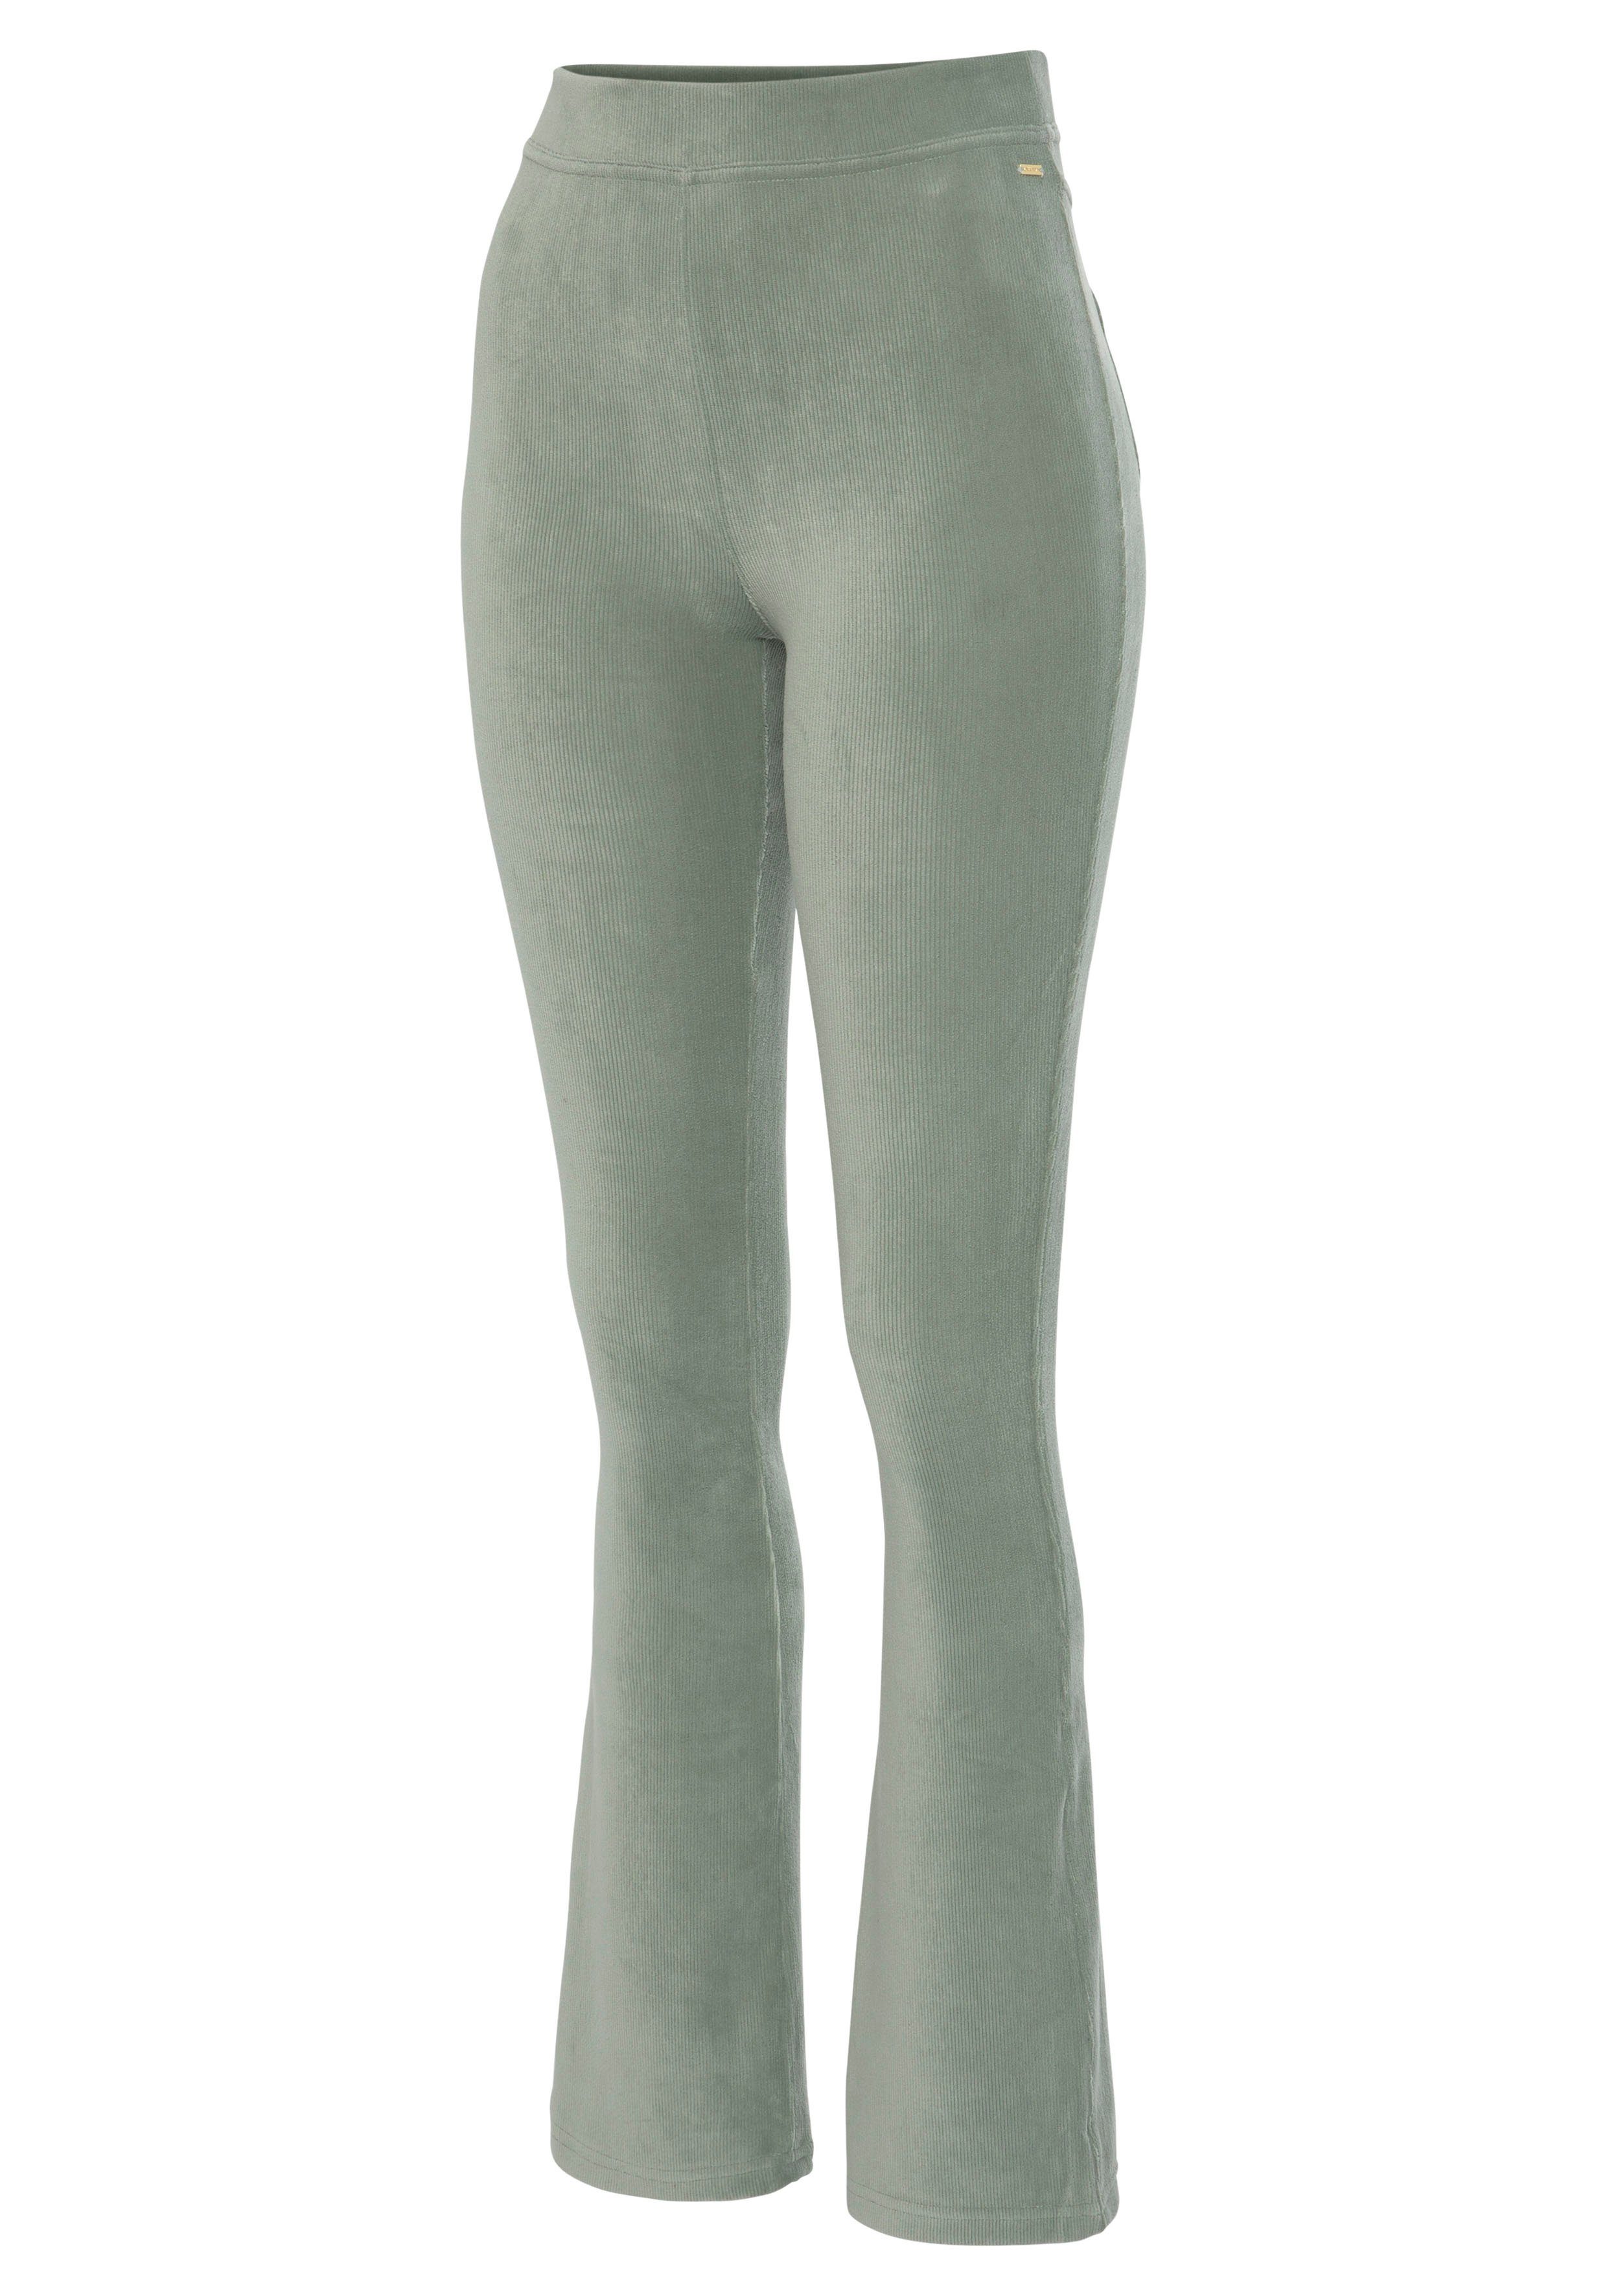 mint Jazzpants aus in LASCANA Cord-Optik, Material Loungewear weichem grün